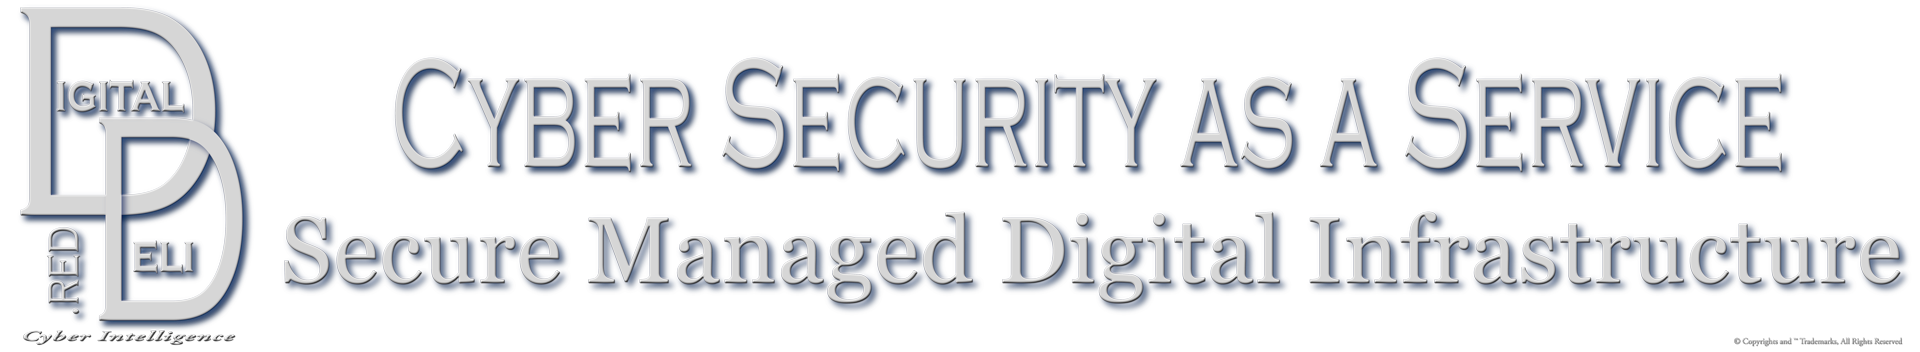 DigitalDeli.red Properties & Brands Imprint, Cyber Security As A Service